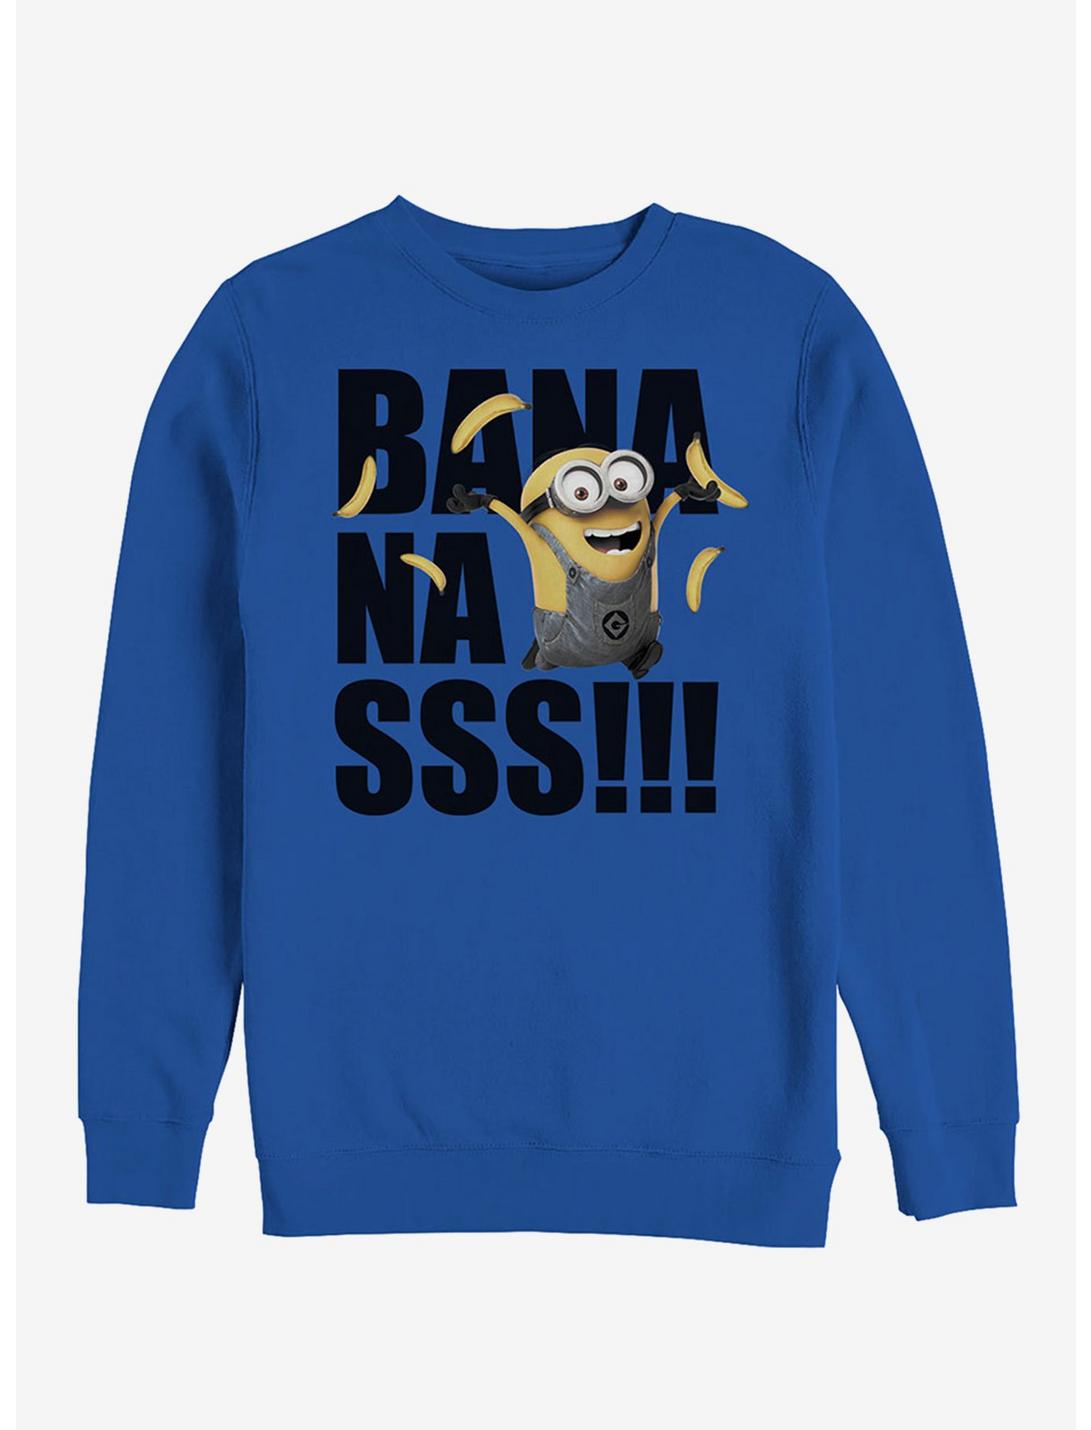 Minion Bananas Forever Sweatshirt, ROYAL, hi-res